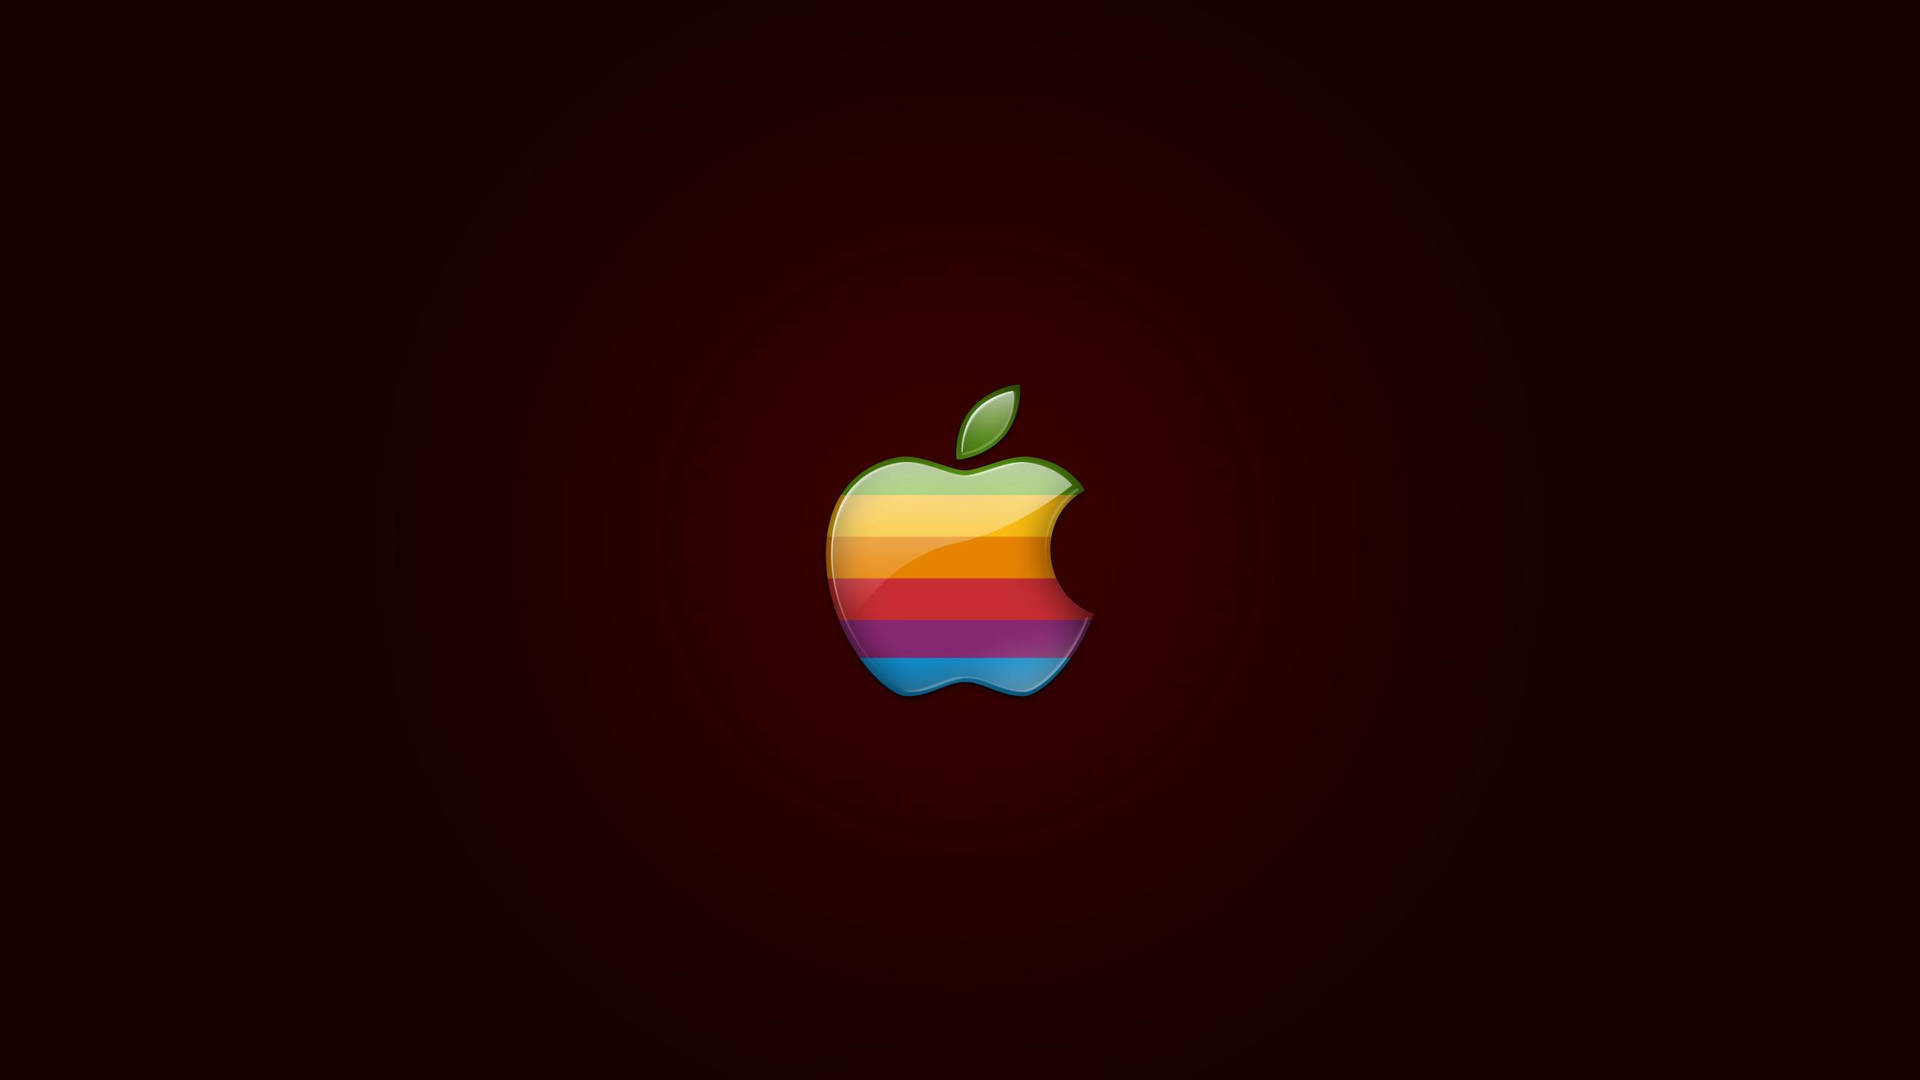 Apple Logo 4k In Rainbow Picture